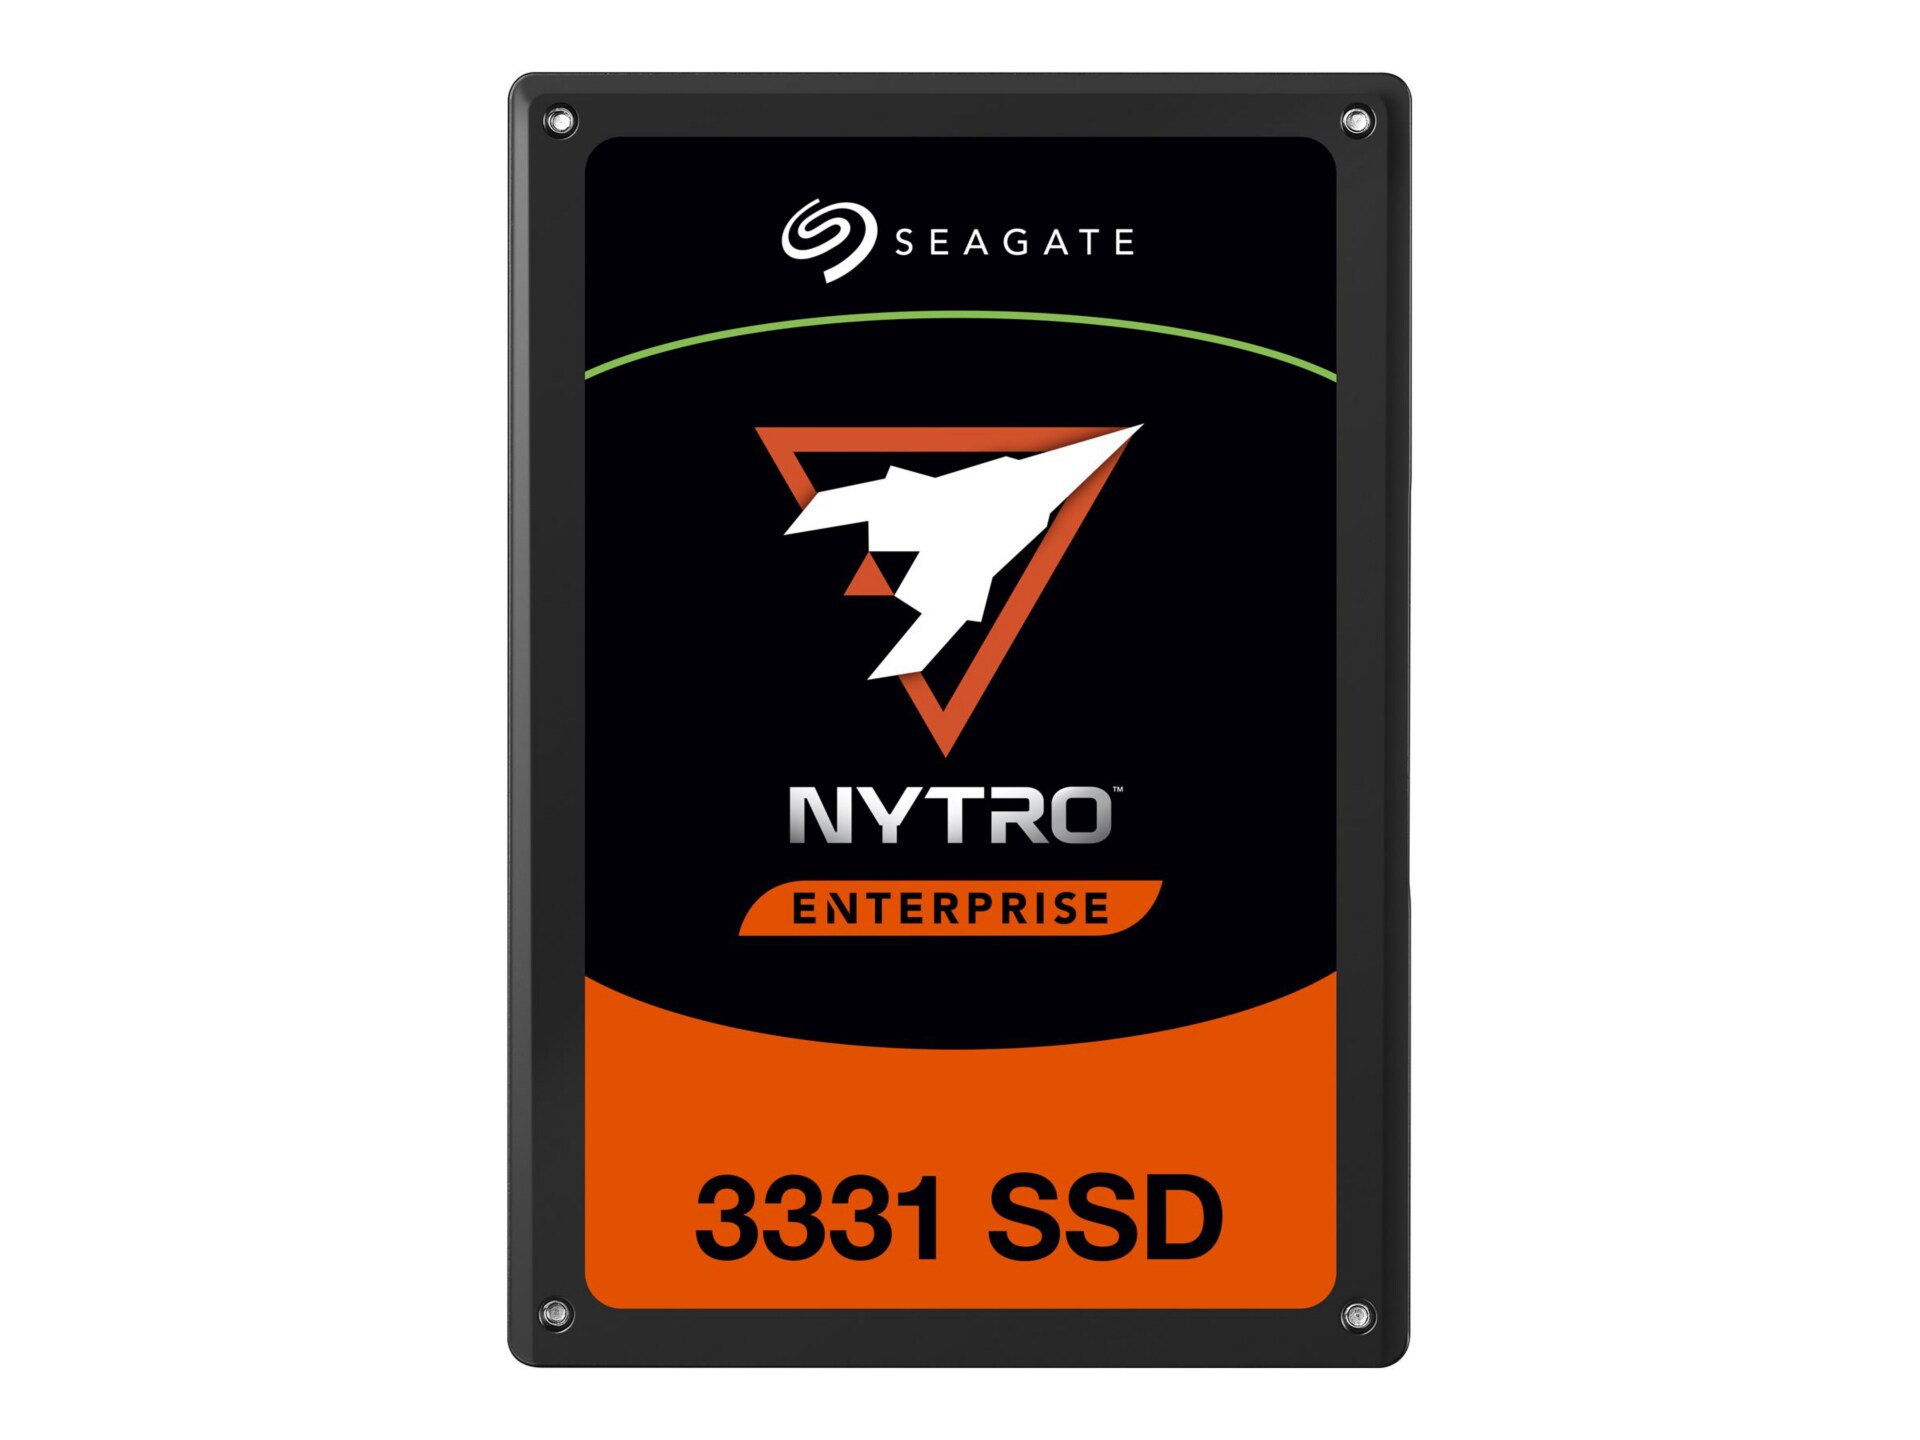 Seagate Nytro 3331 XS960SE70014 - SSD - 960 GB - SAS 12Gb/s